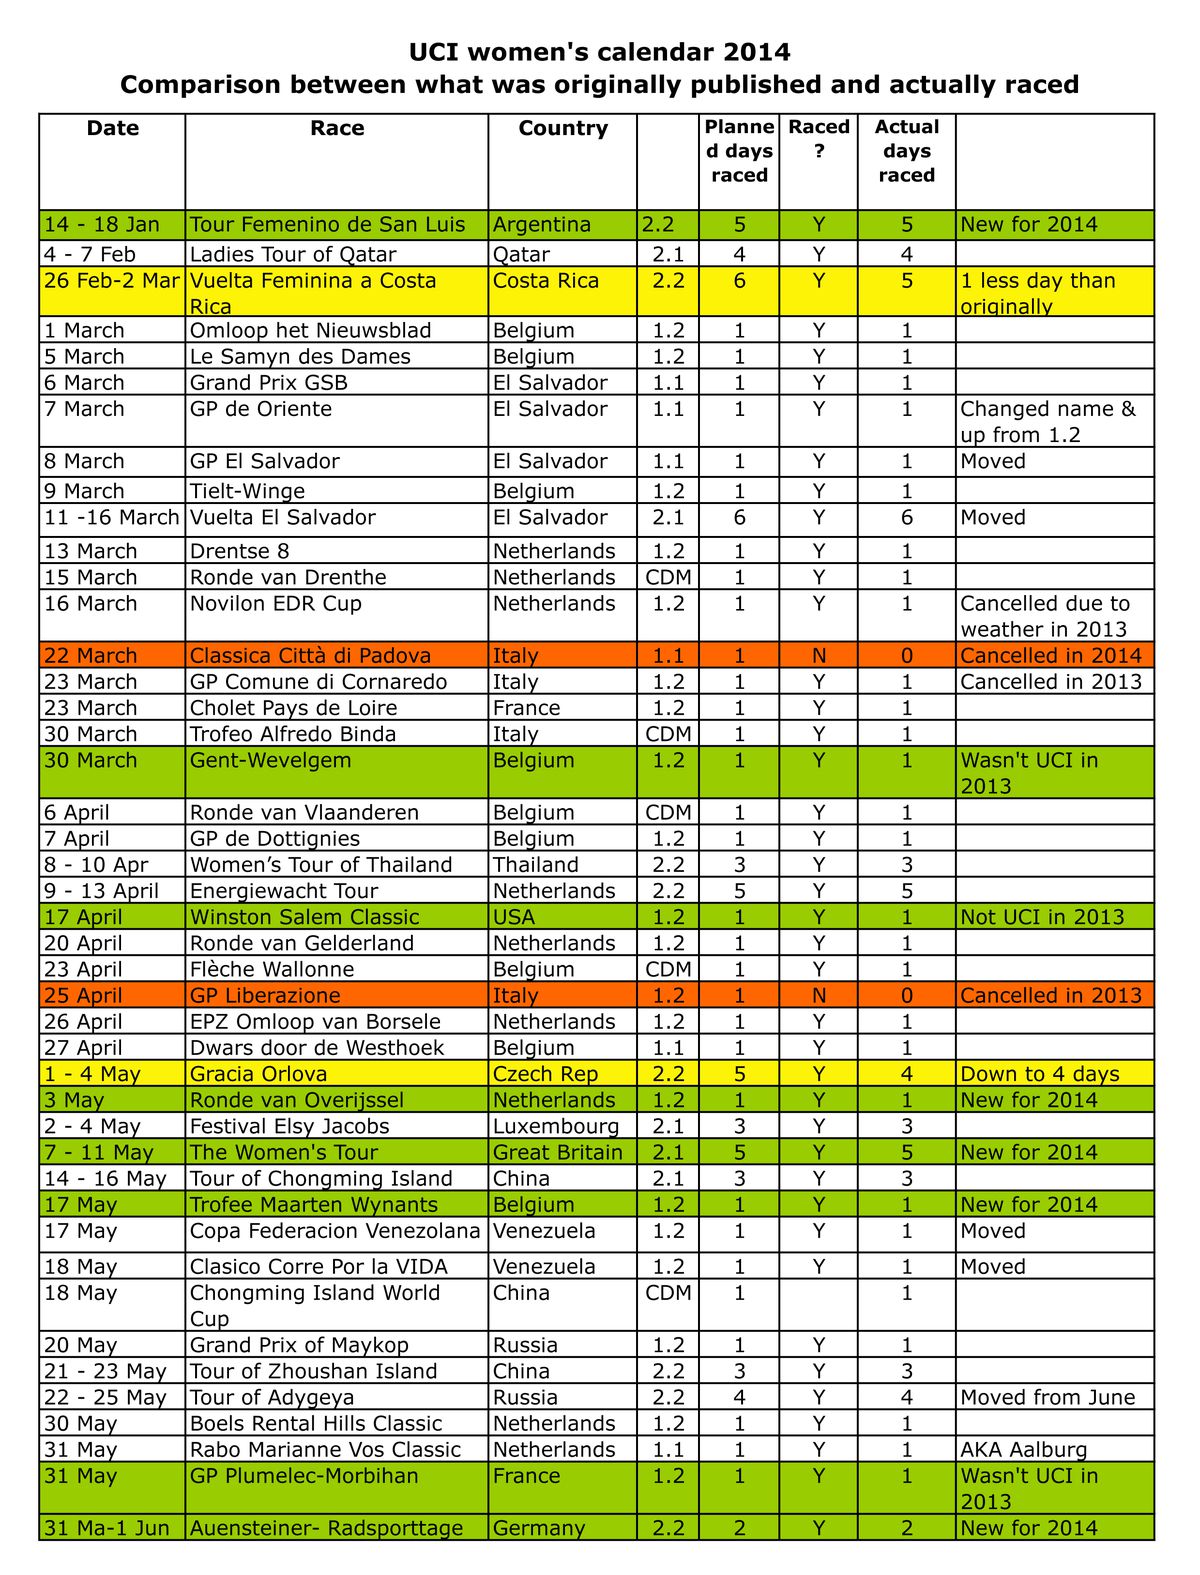 women's cycling 2014 calendar - planned versus raced 1